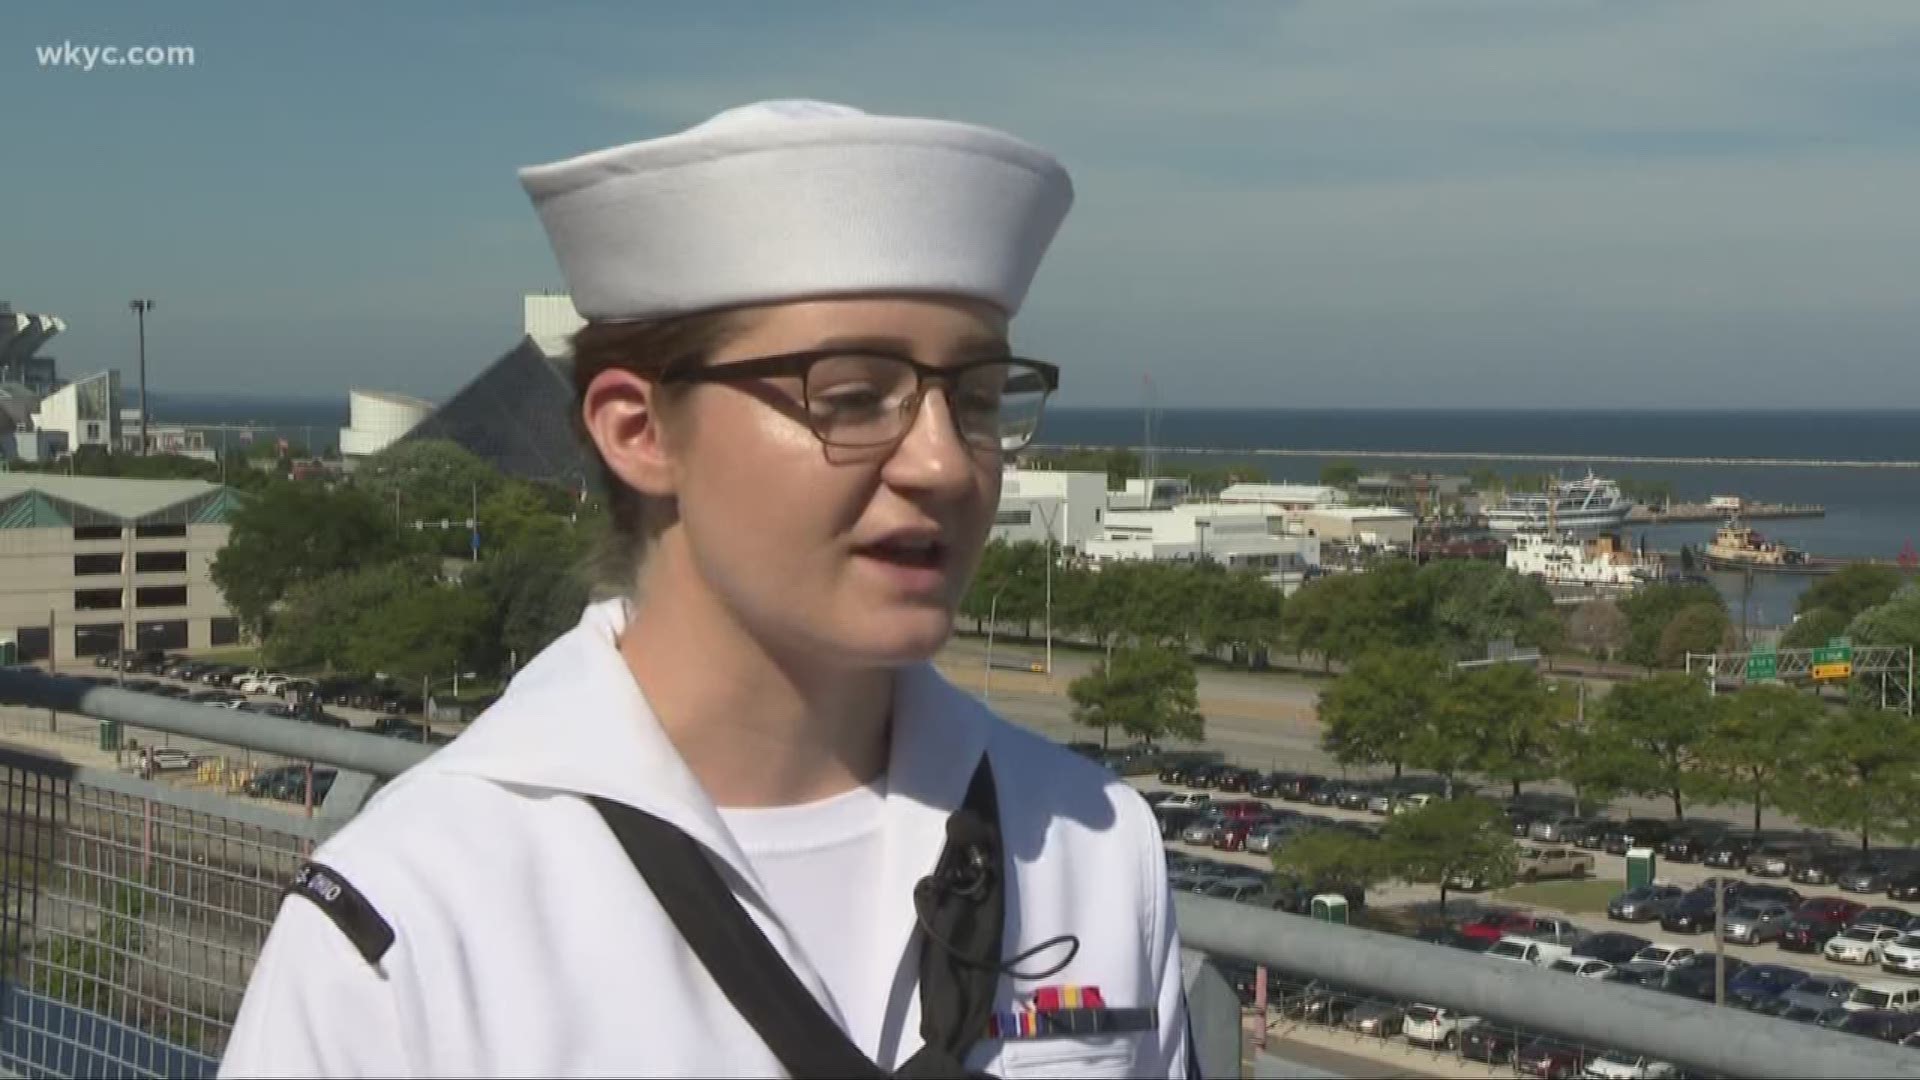 Girls in STEM: 19-year-old woman serves on Navy submarine U.S.S. Ohio